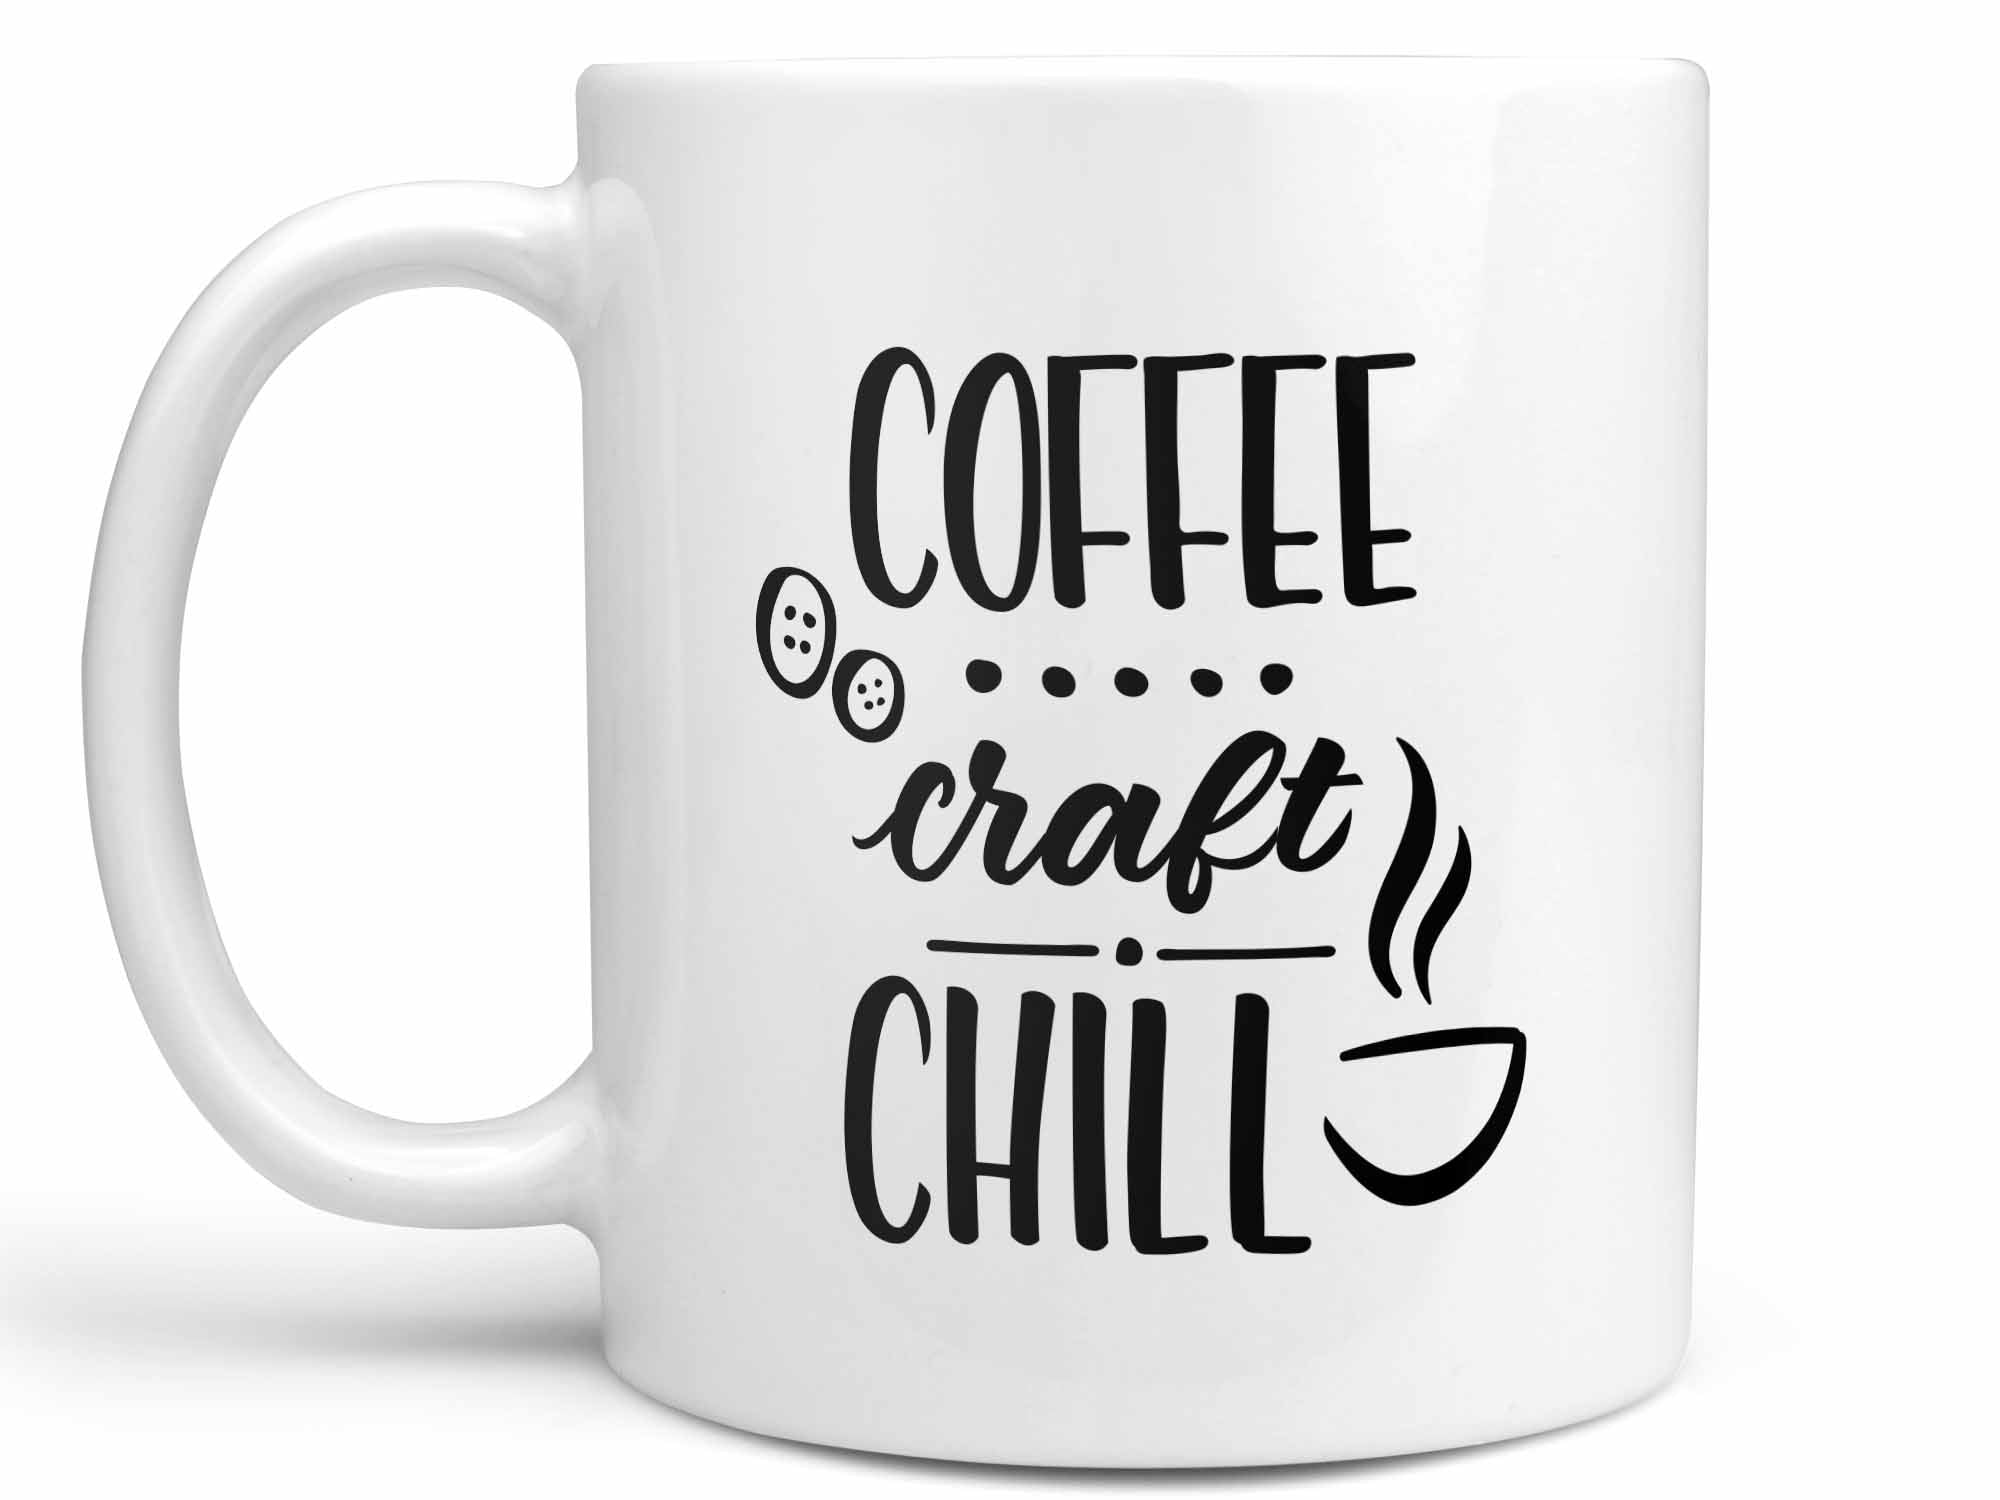 Coffee Craft and Chill Coffee Mug